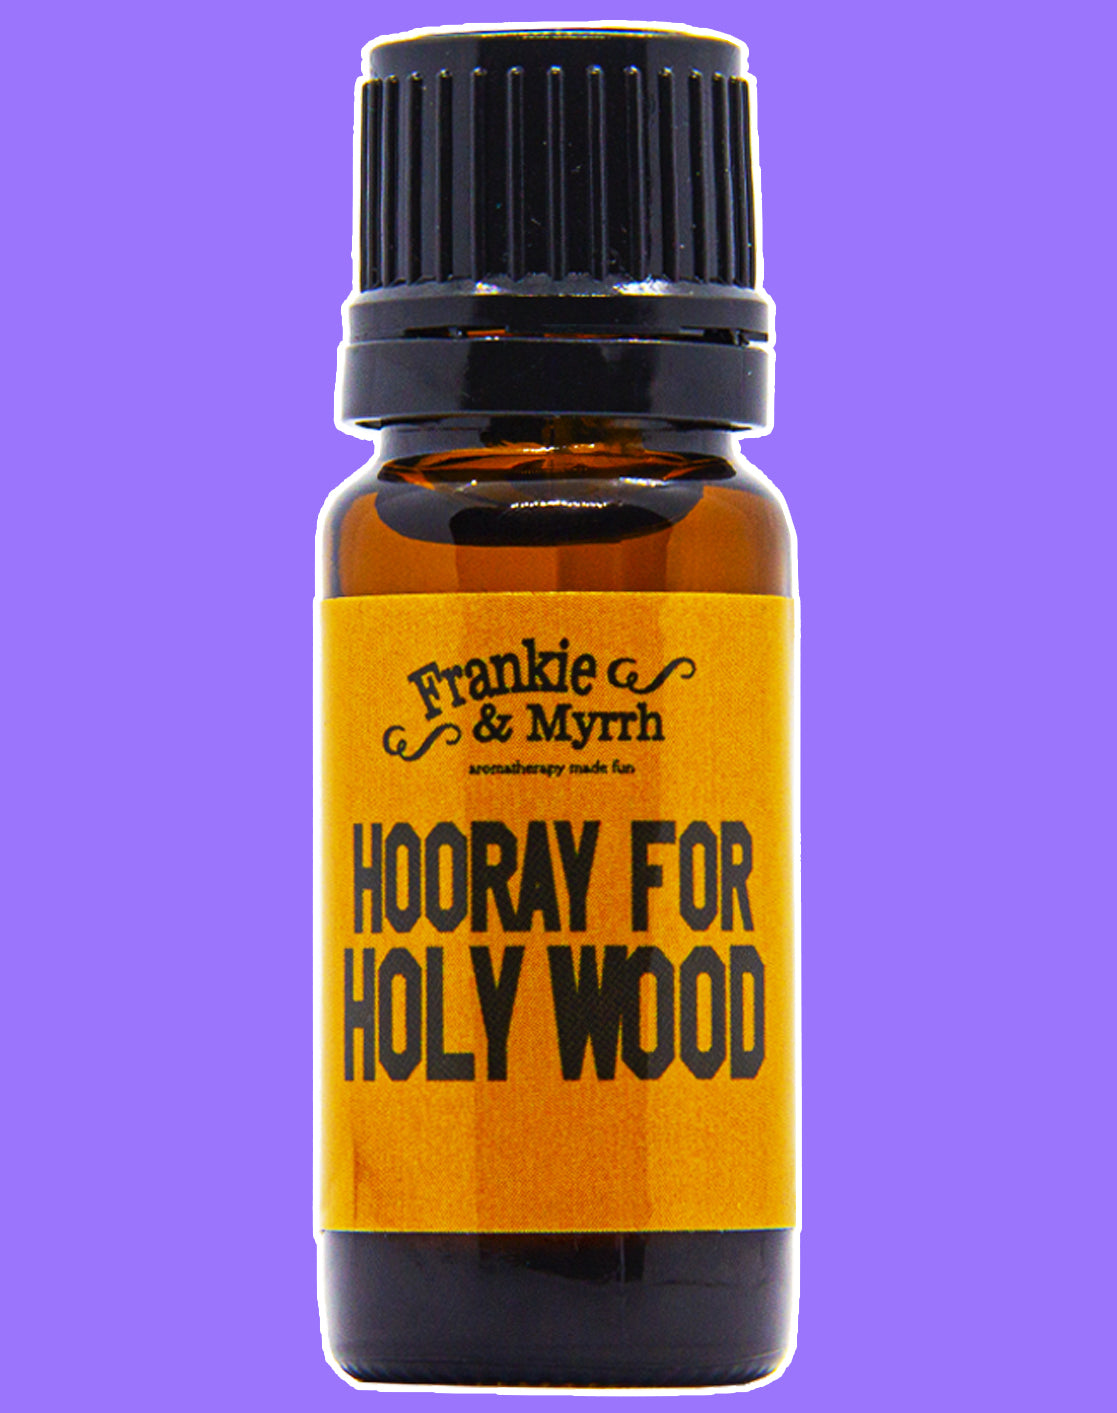 Hooray for Holywood | Palo Santo Blend